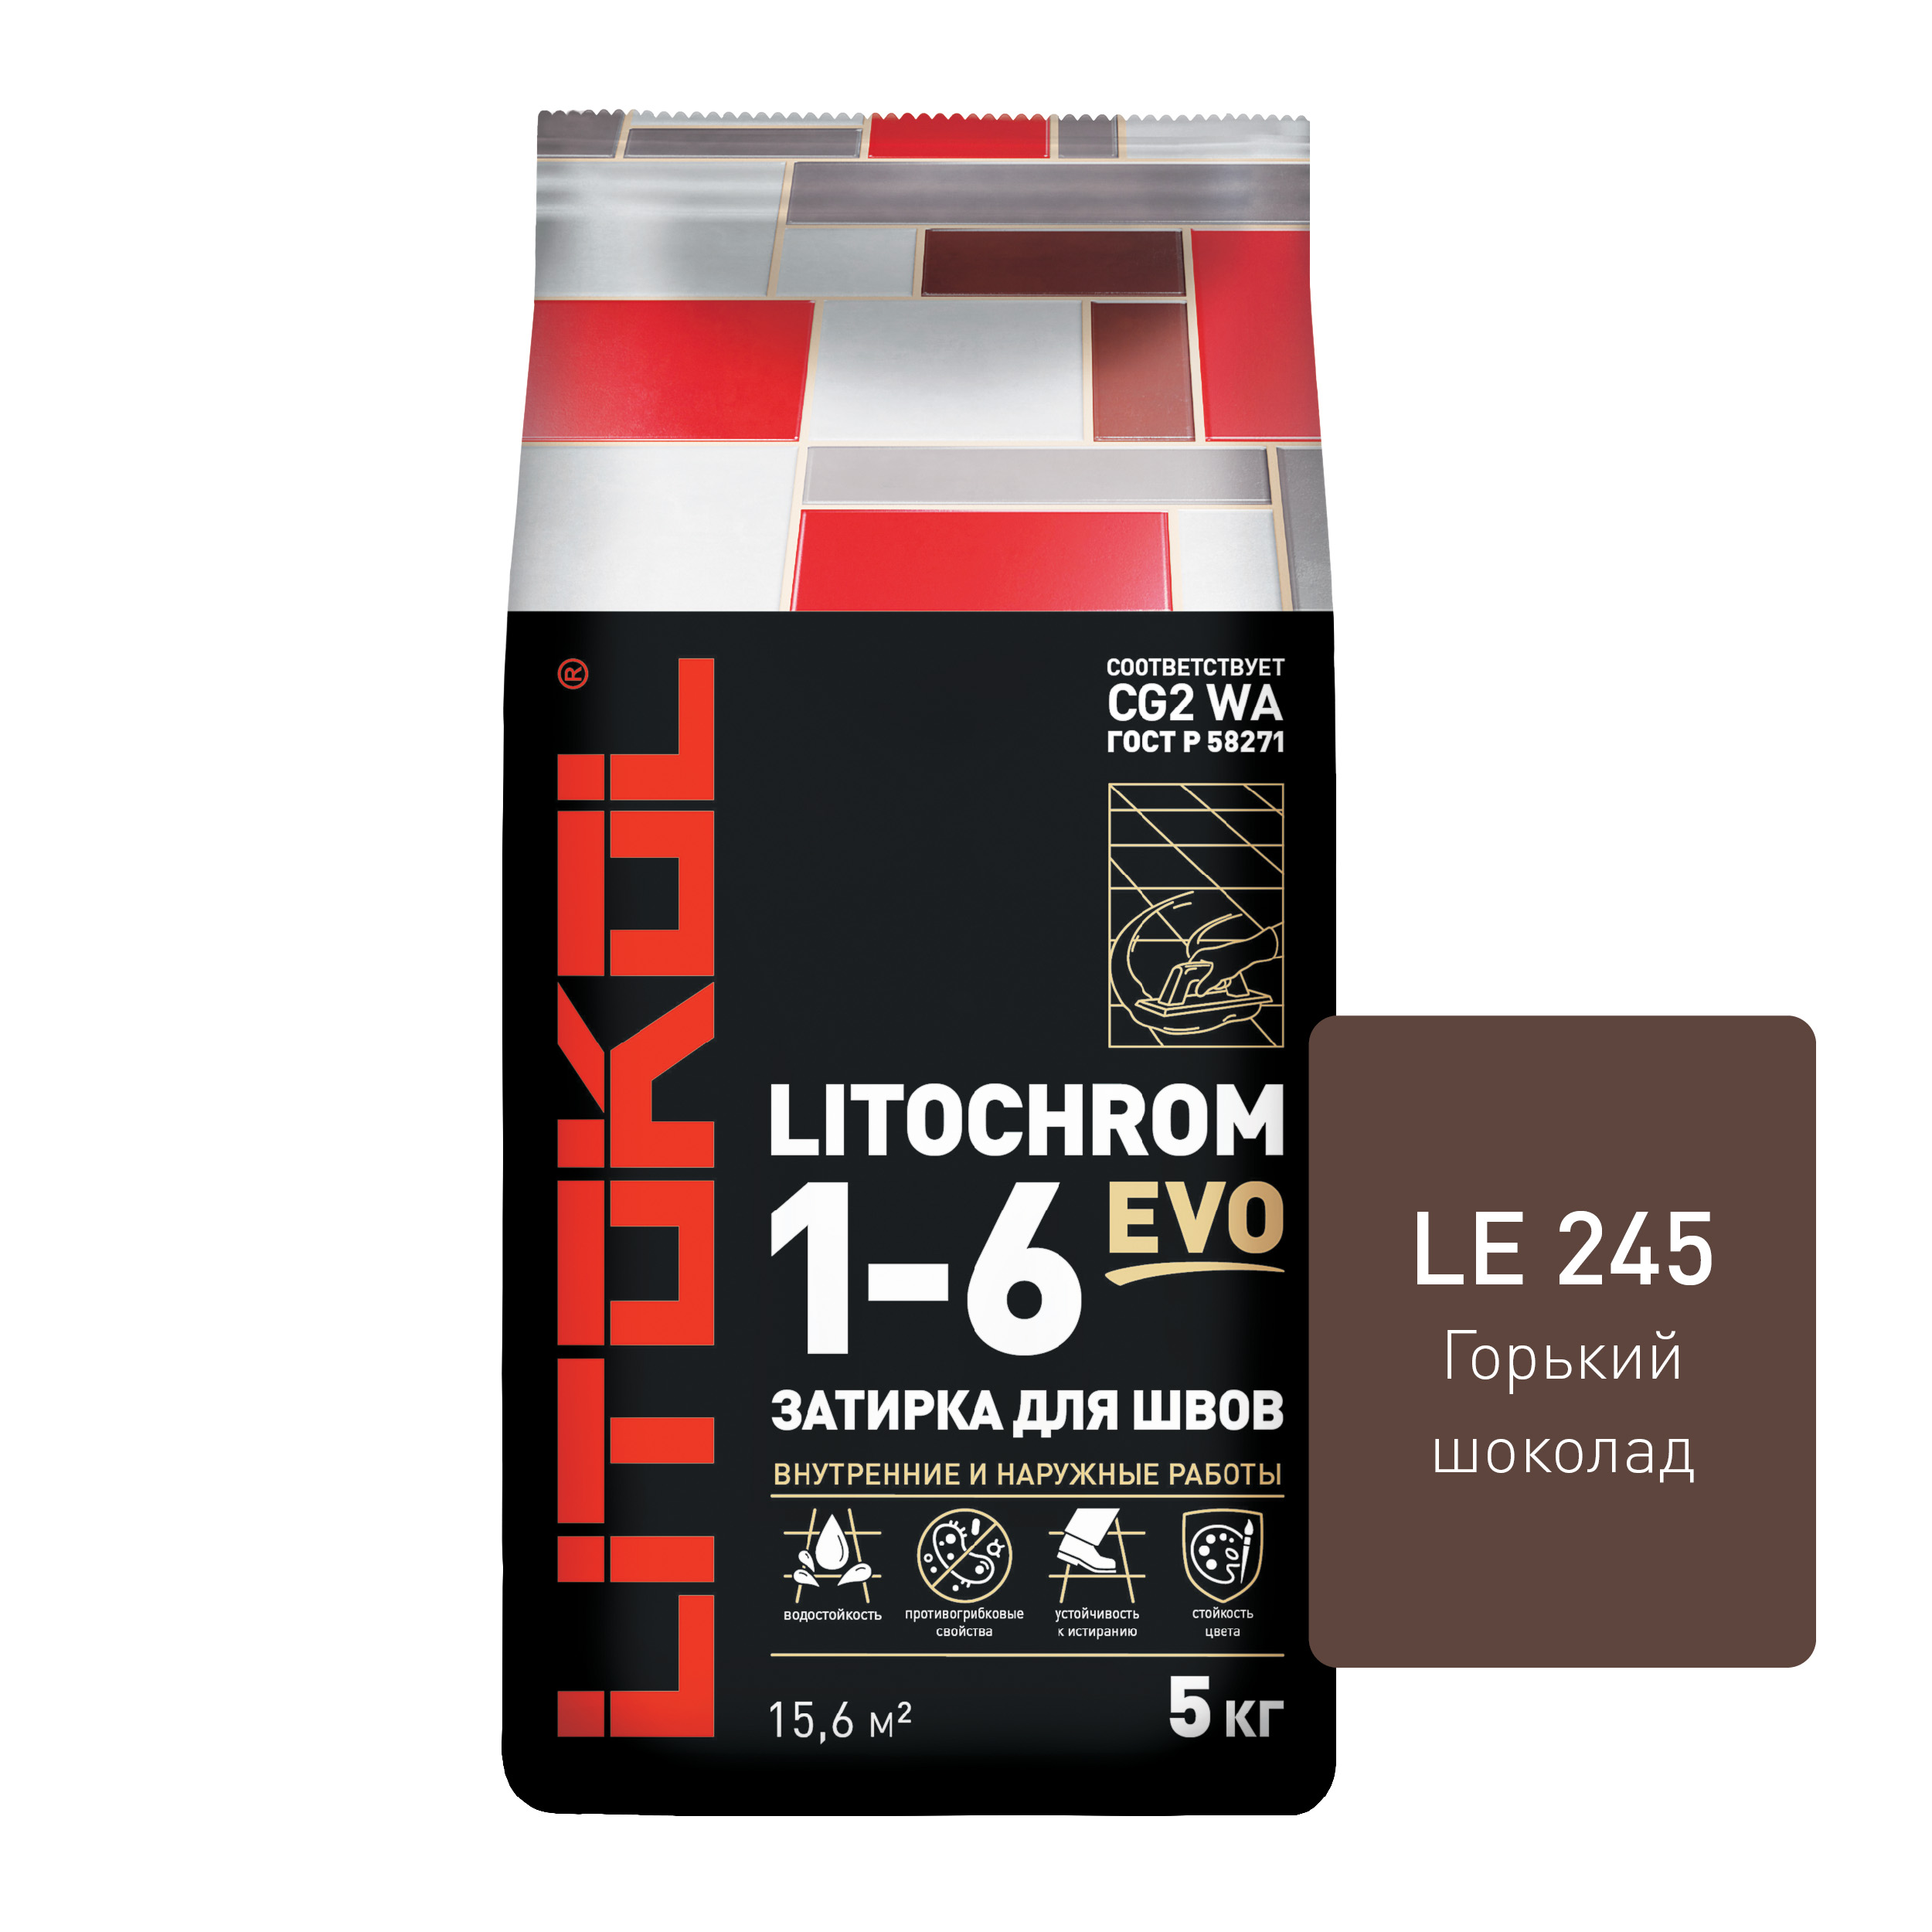 Цементная затирка LITOKOL LITOCHROM 1-6 EVO LE.245 Горький шоколад, 5 кг